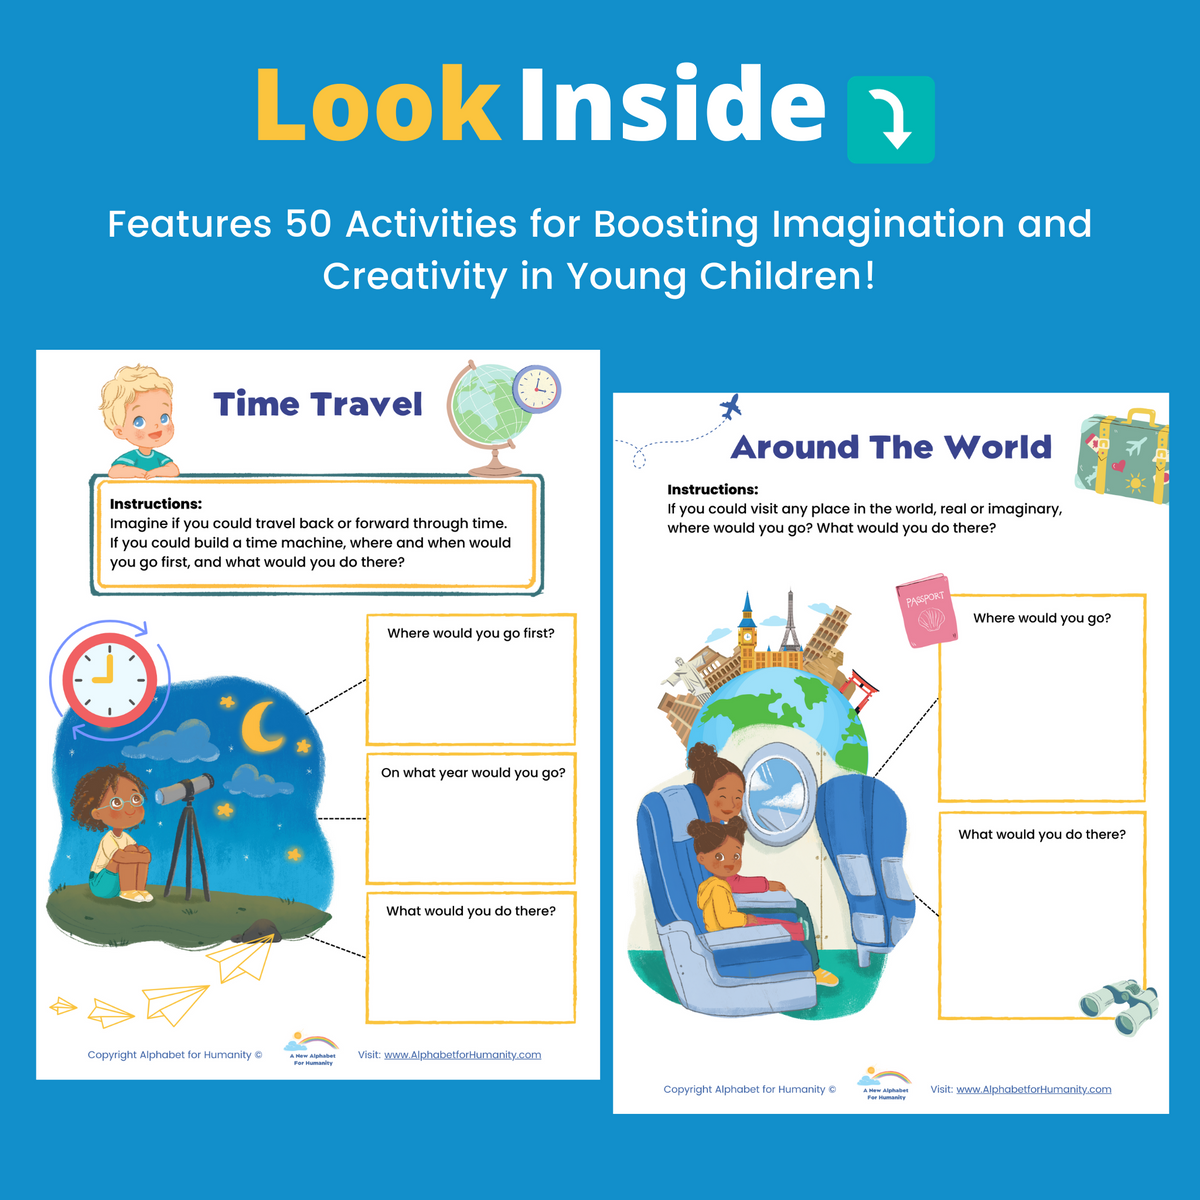 Raising Creative Kids - Creativity and Imagination Printable Activity Kit (PDF)